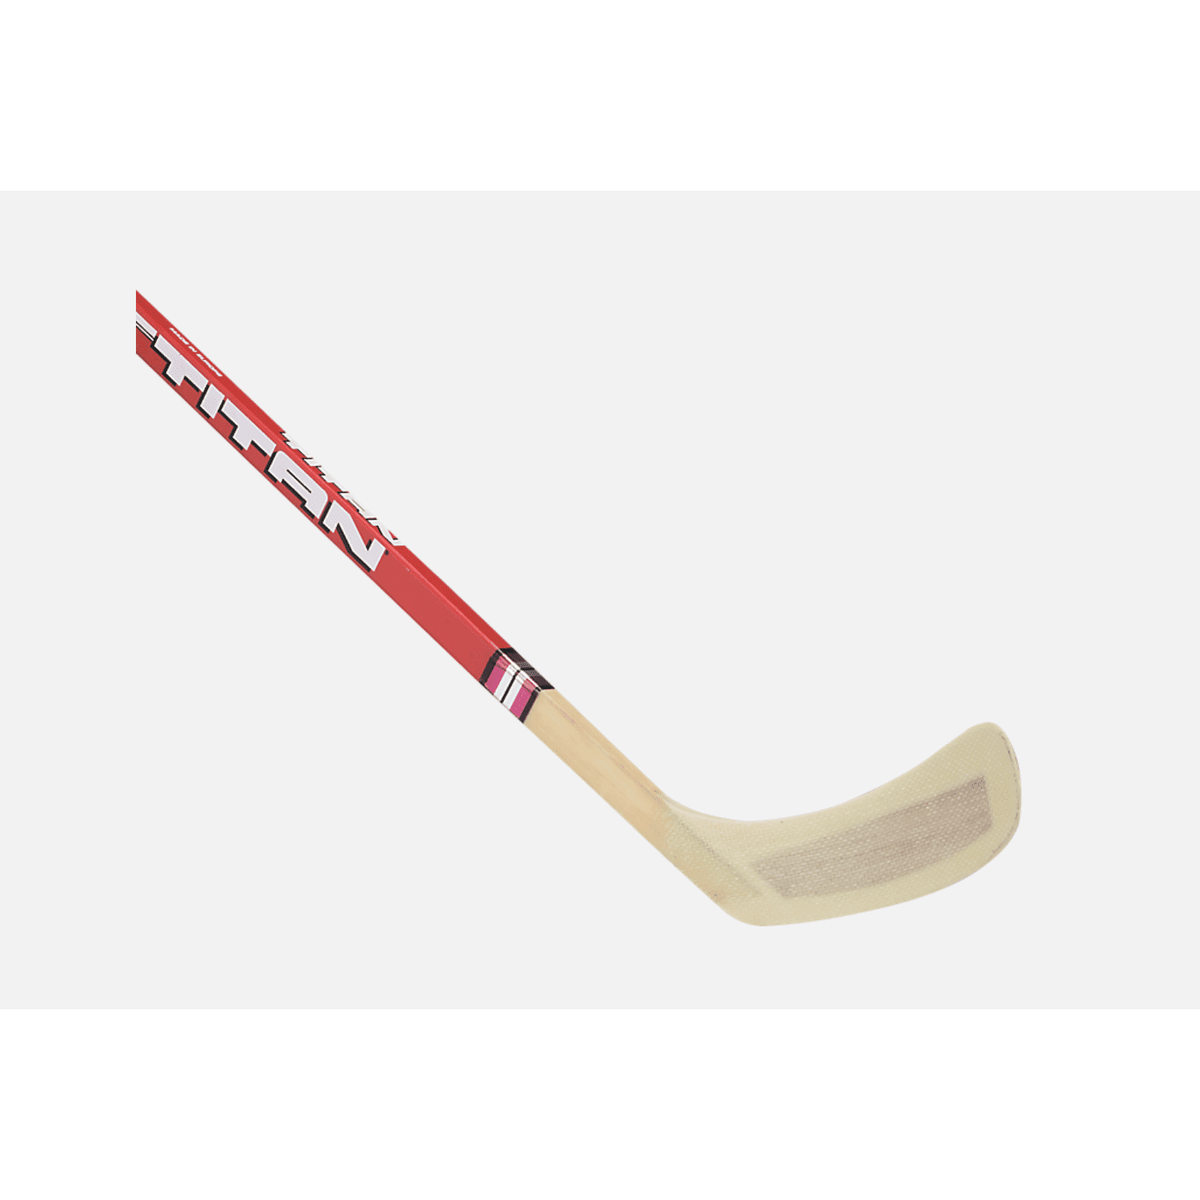 Titan Wooden Hockey Stick Senior